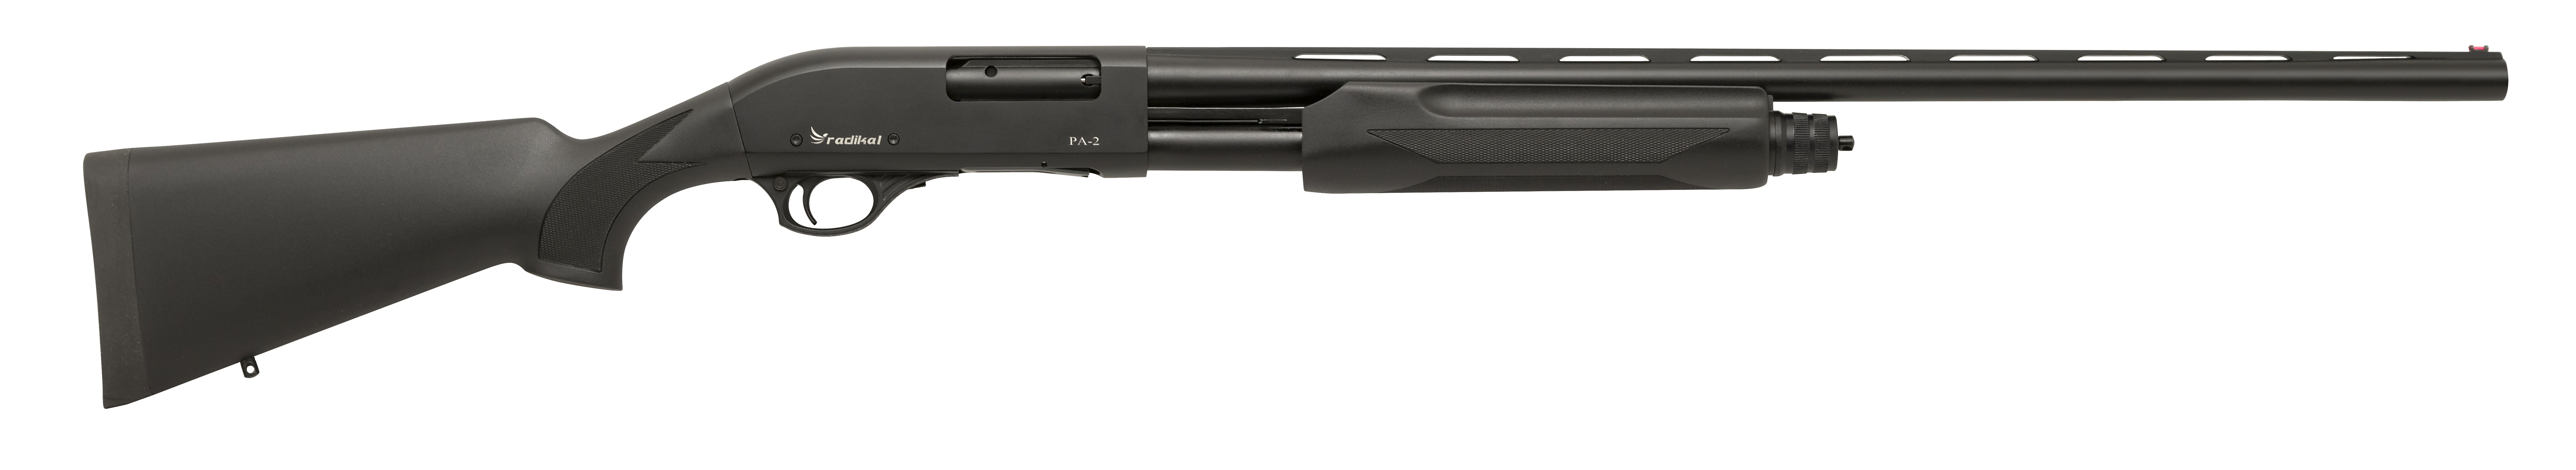 Radikal Arms PA-2